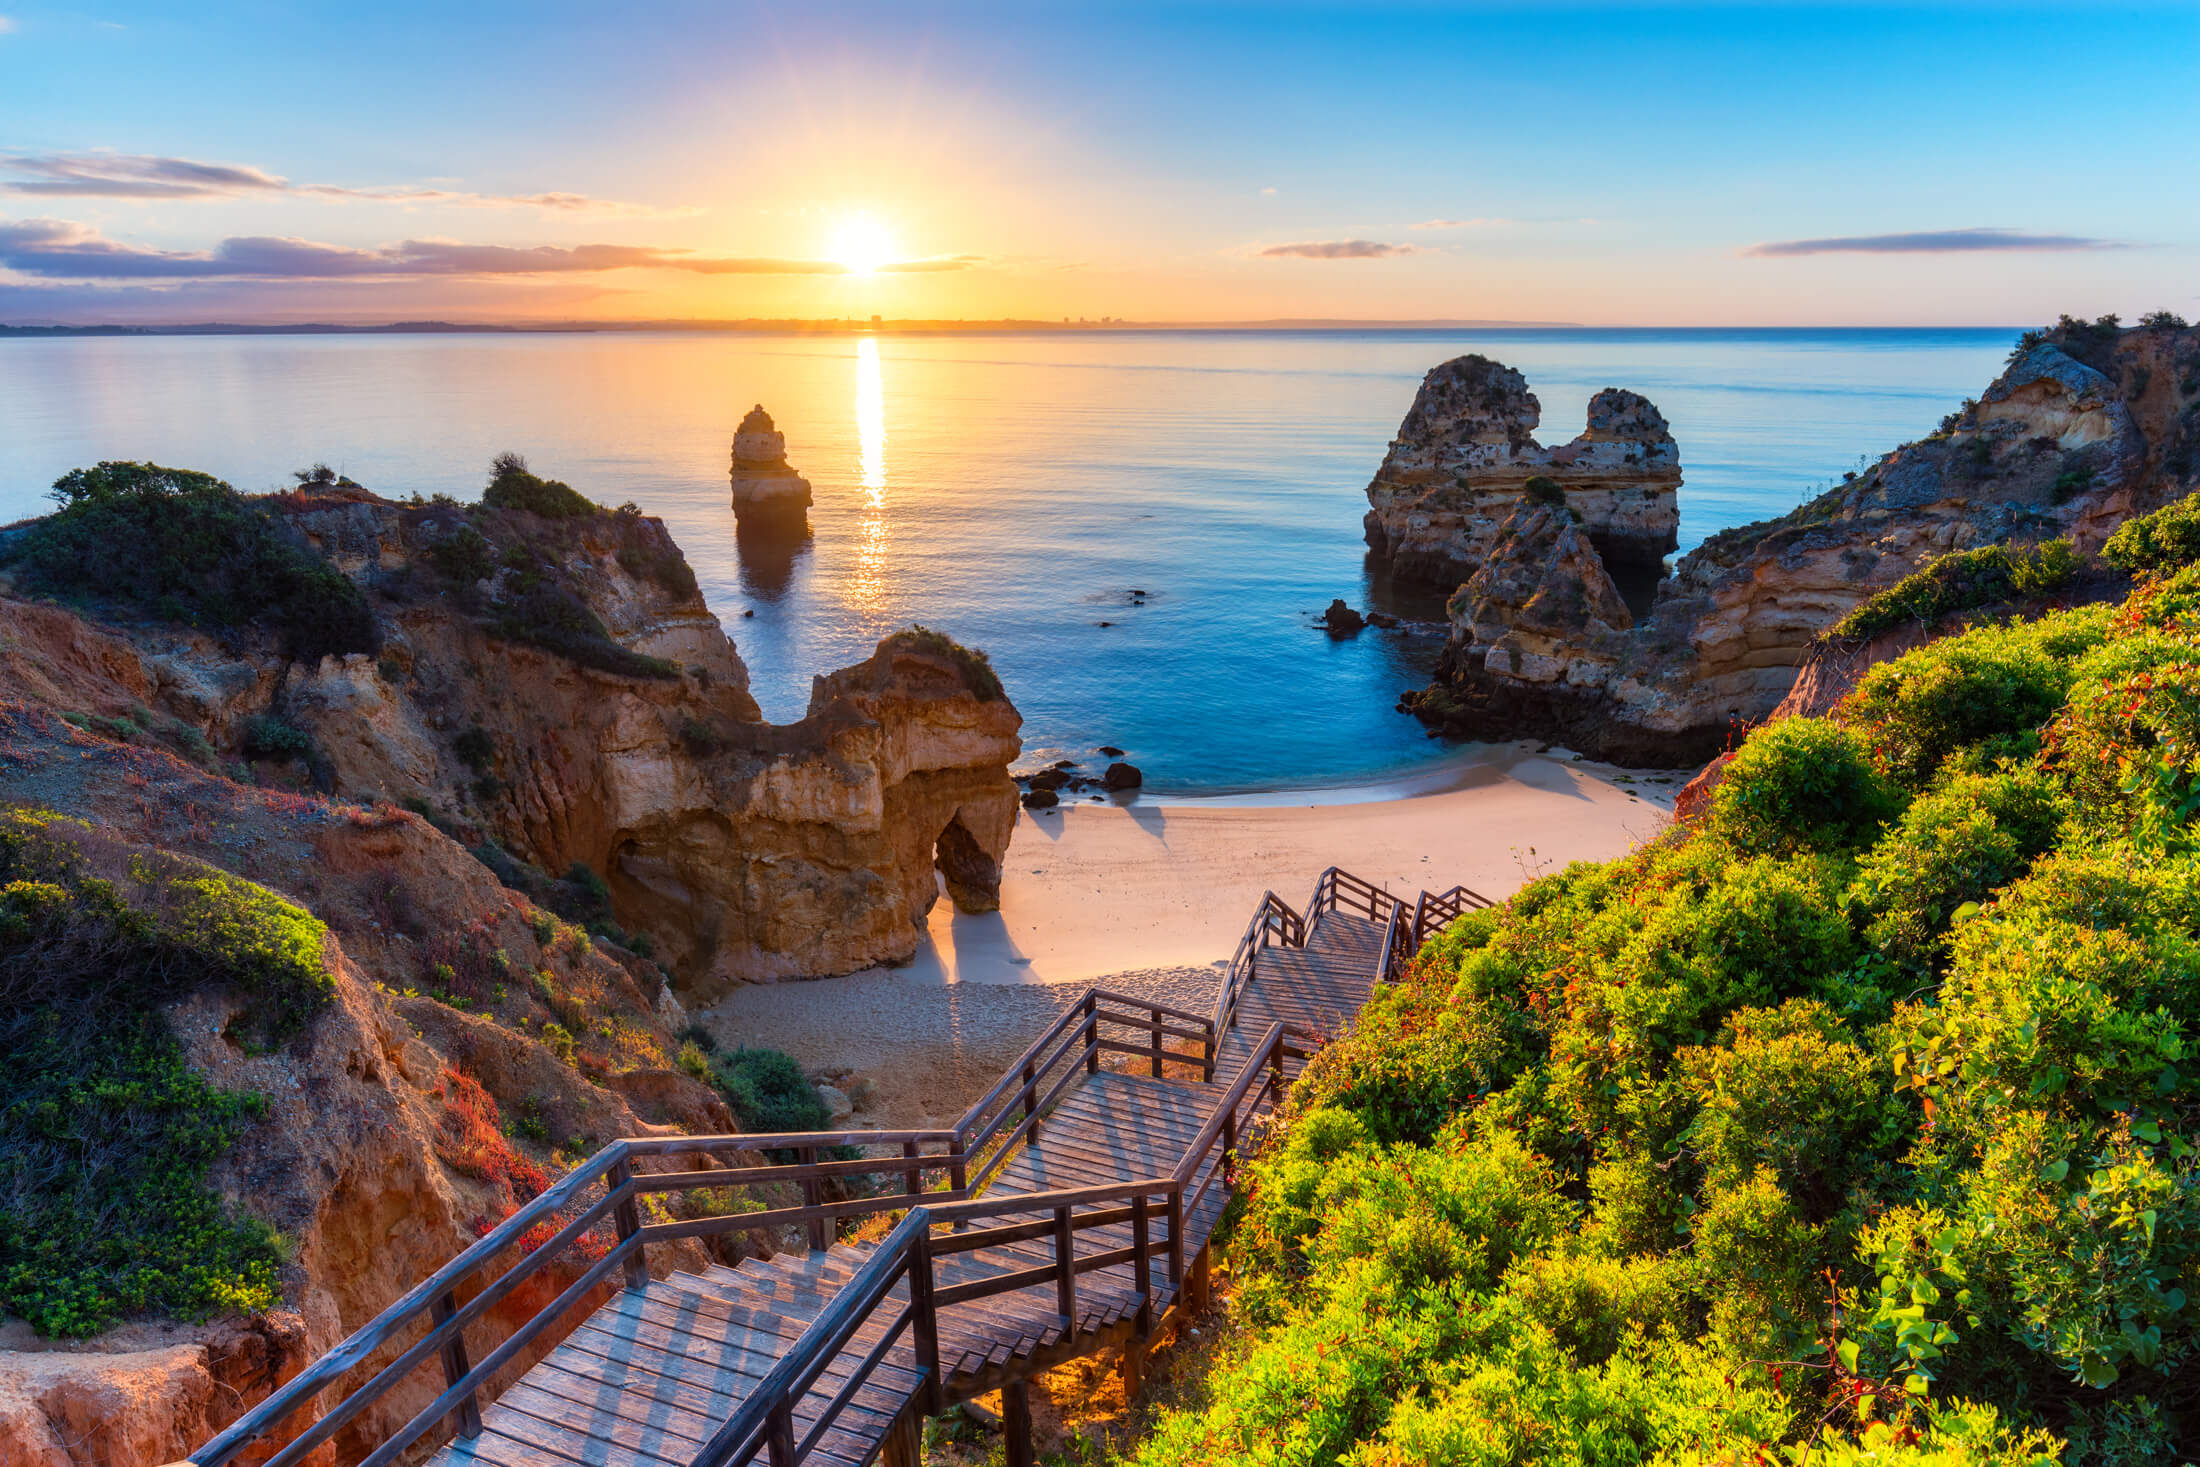 Steps leading down to a hidden beach on Portugal's Algarve coast